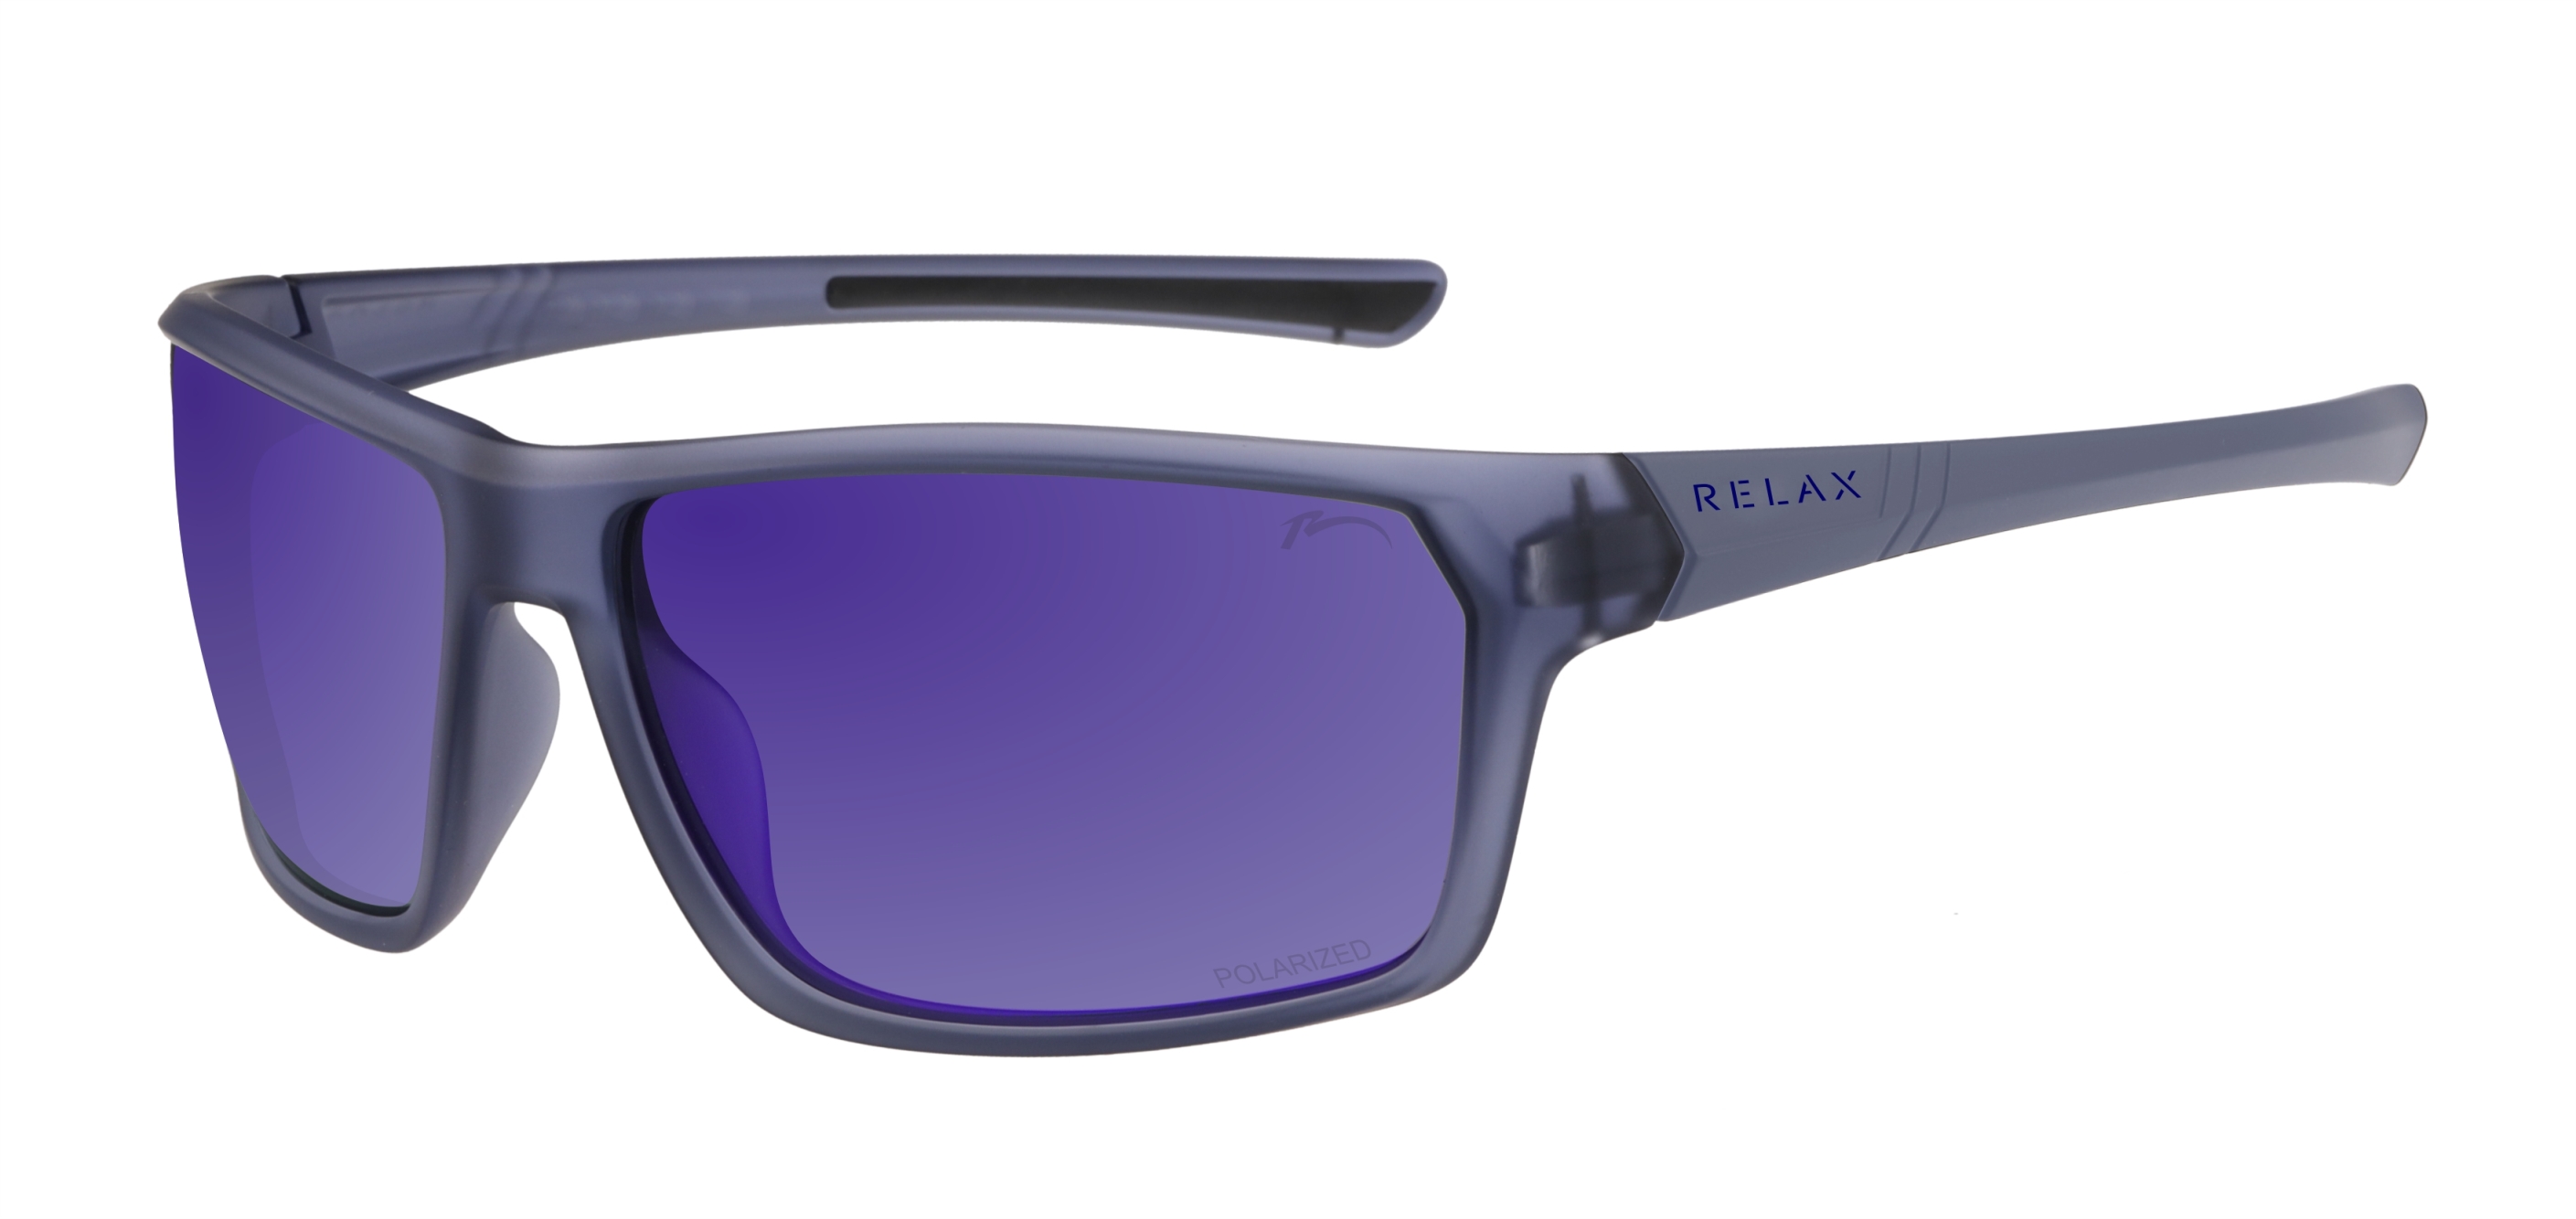 Polarized sport sunglasses  Gifu Relax R5428B standard